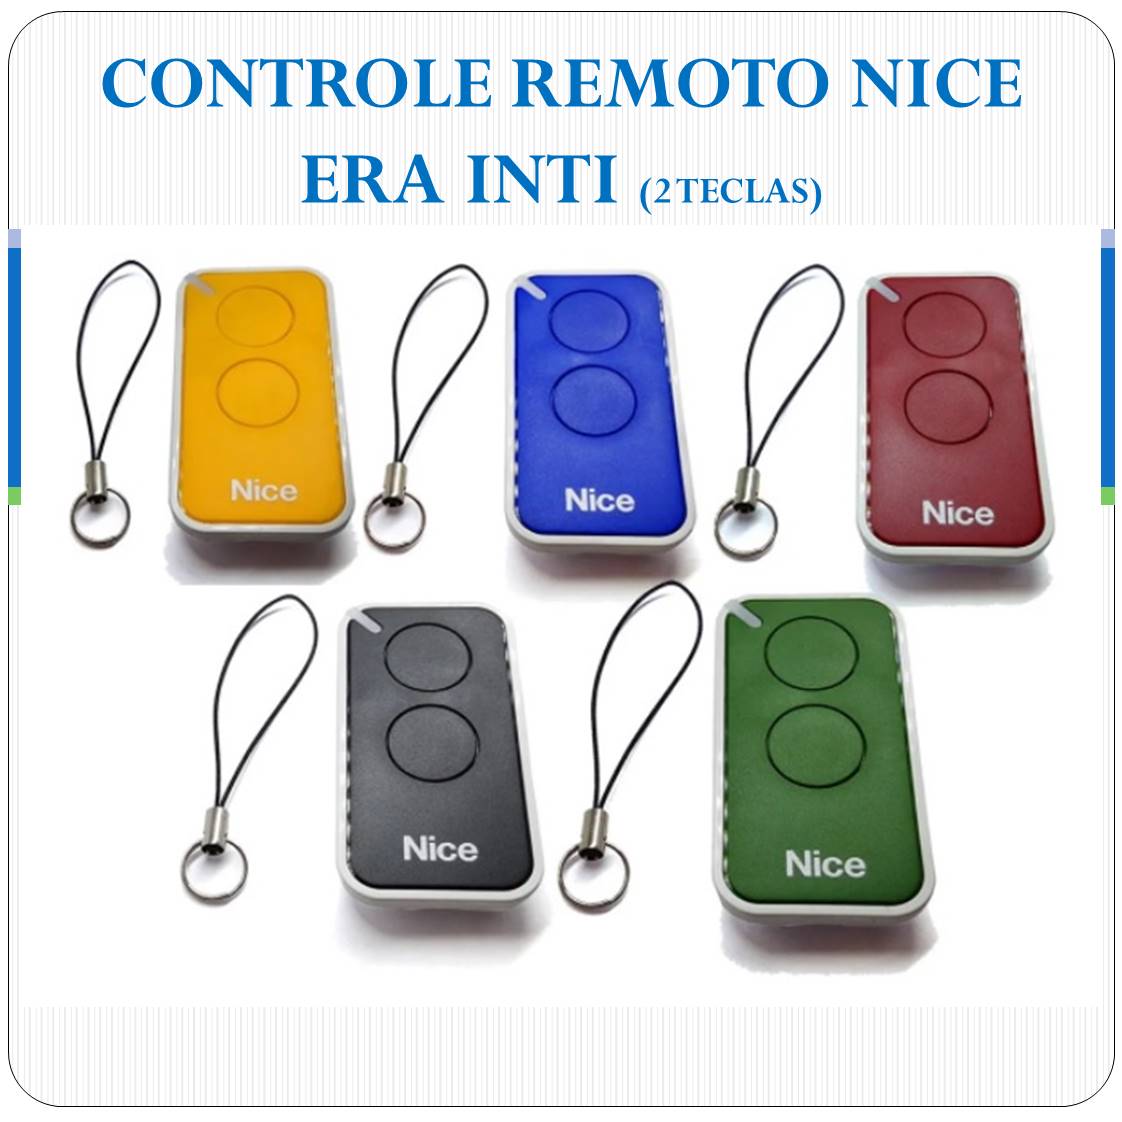 Controle Remoto NICE ERA INTI - 2 teclas